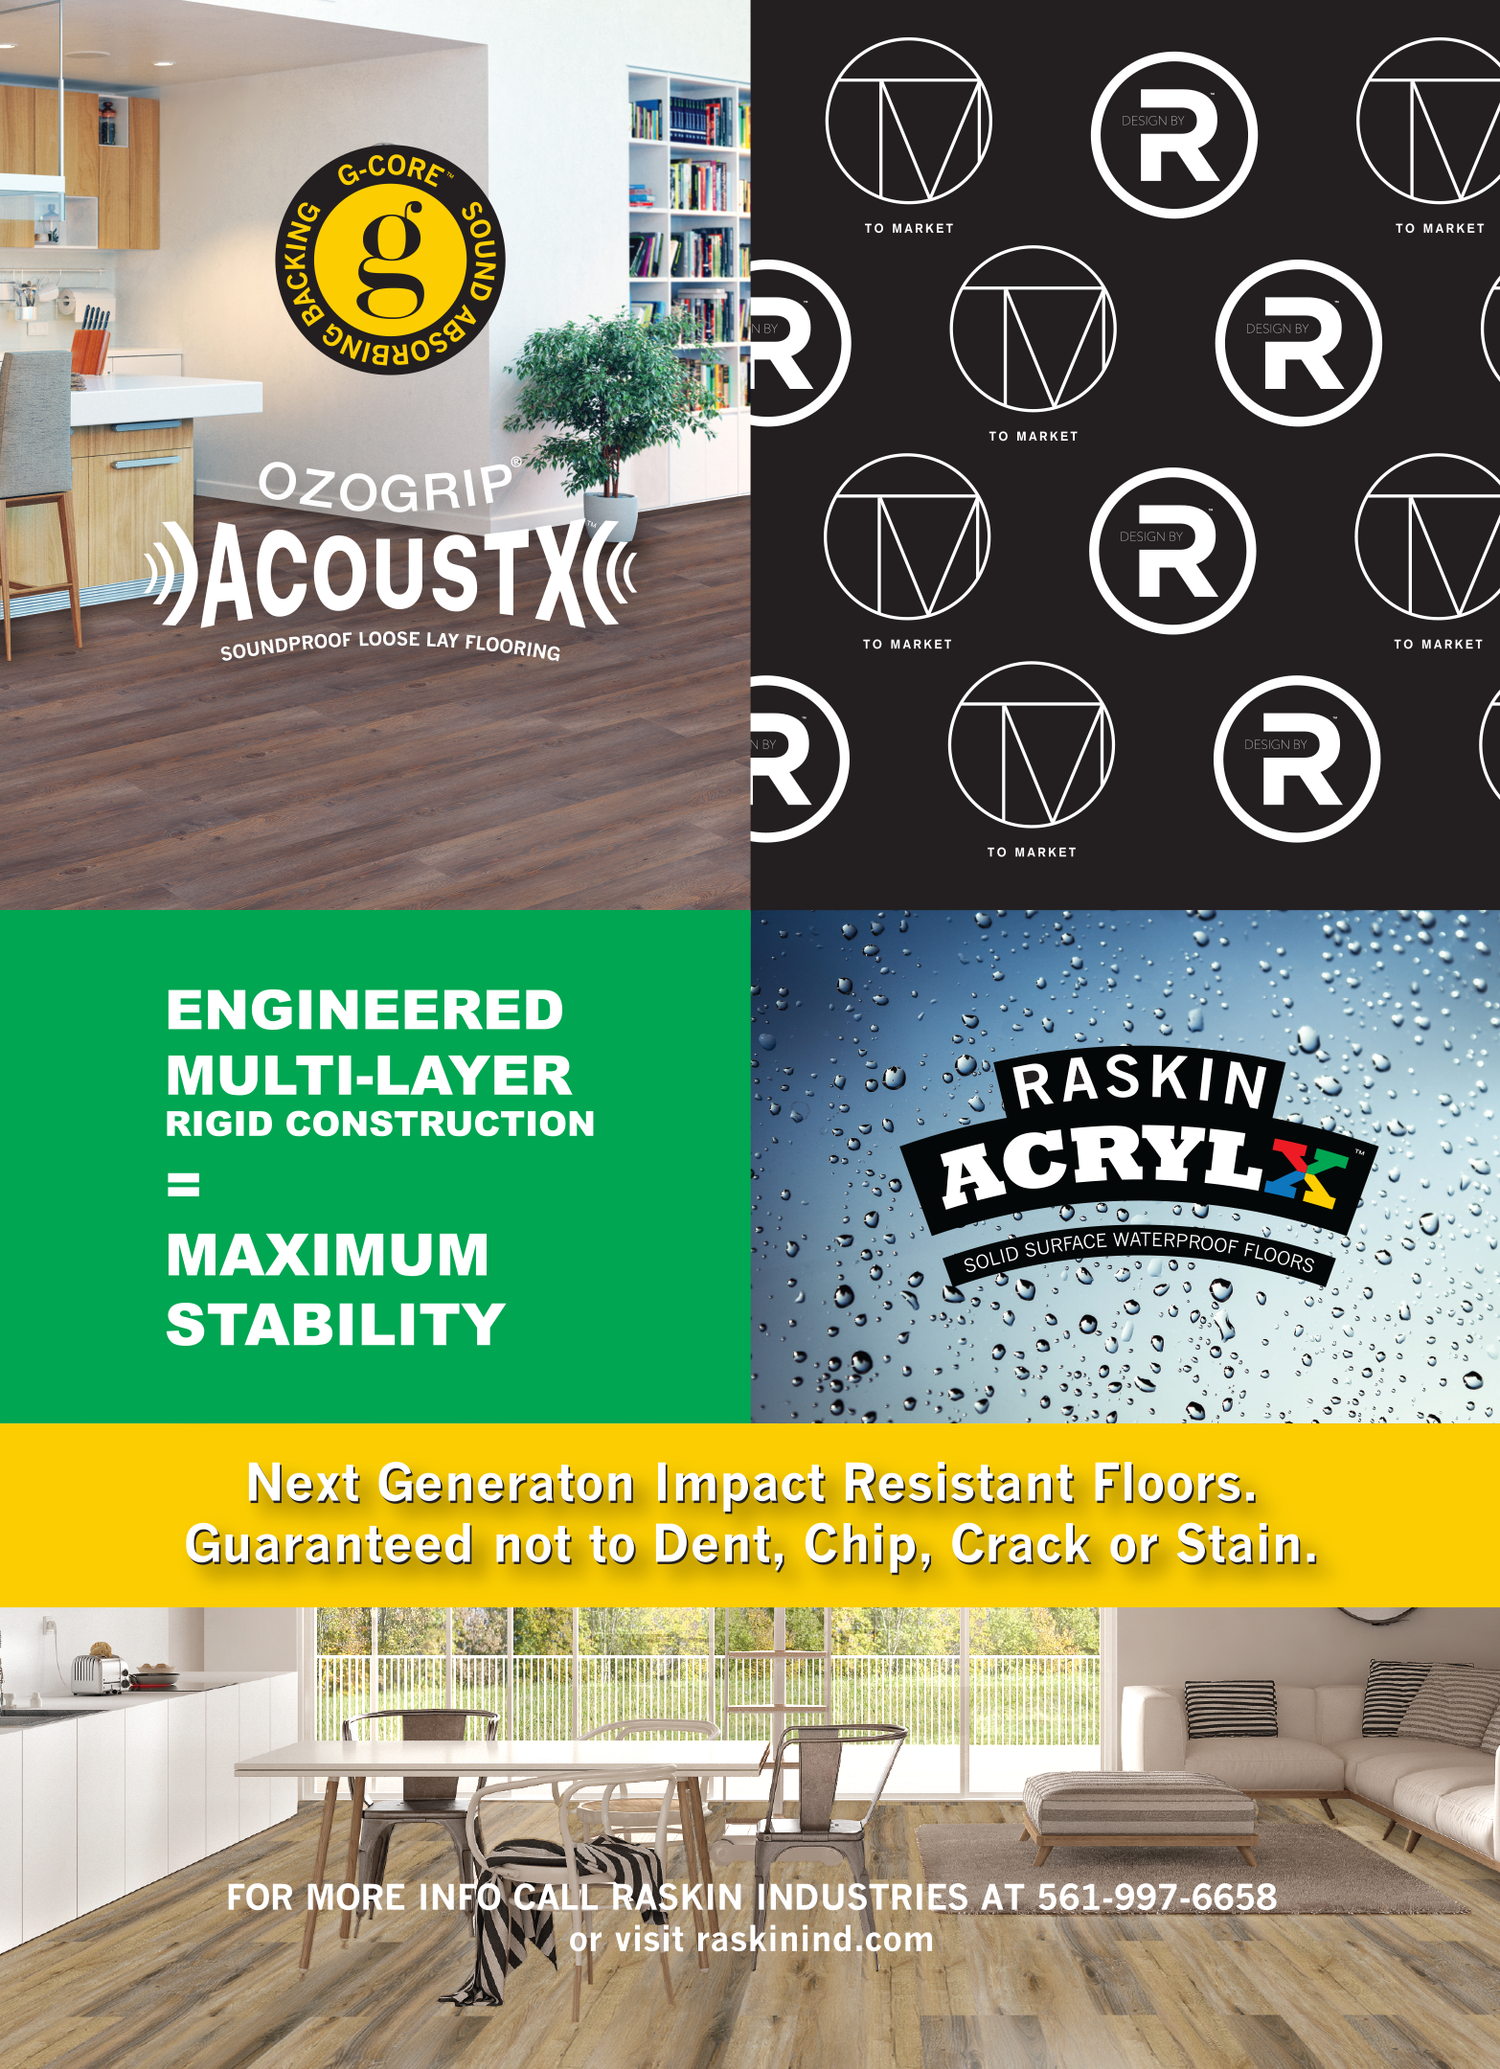 Raskin Industries expands via To Market acquisition